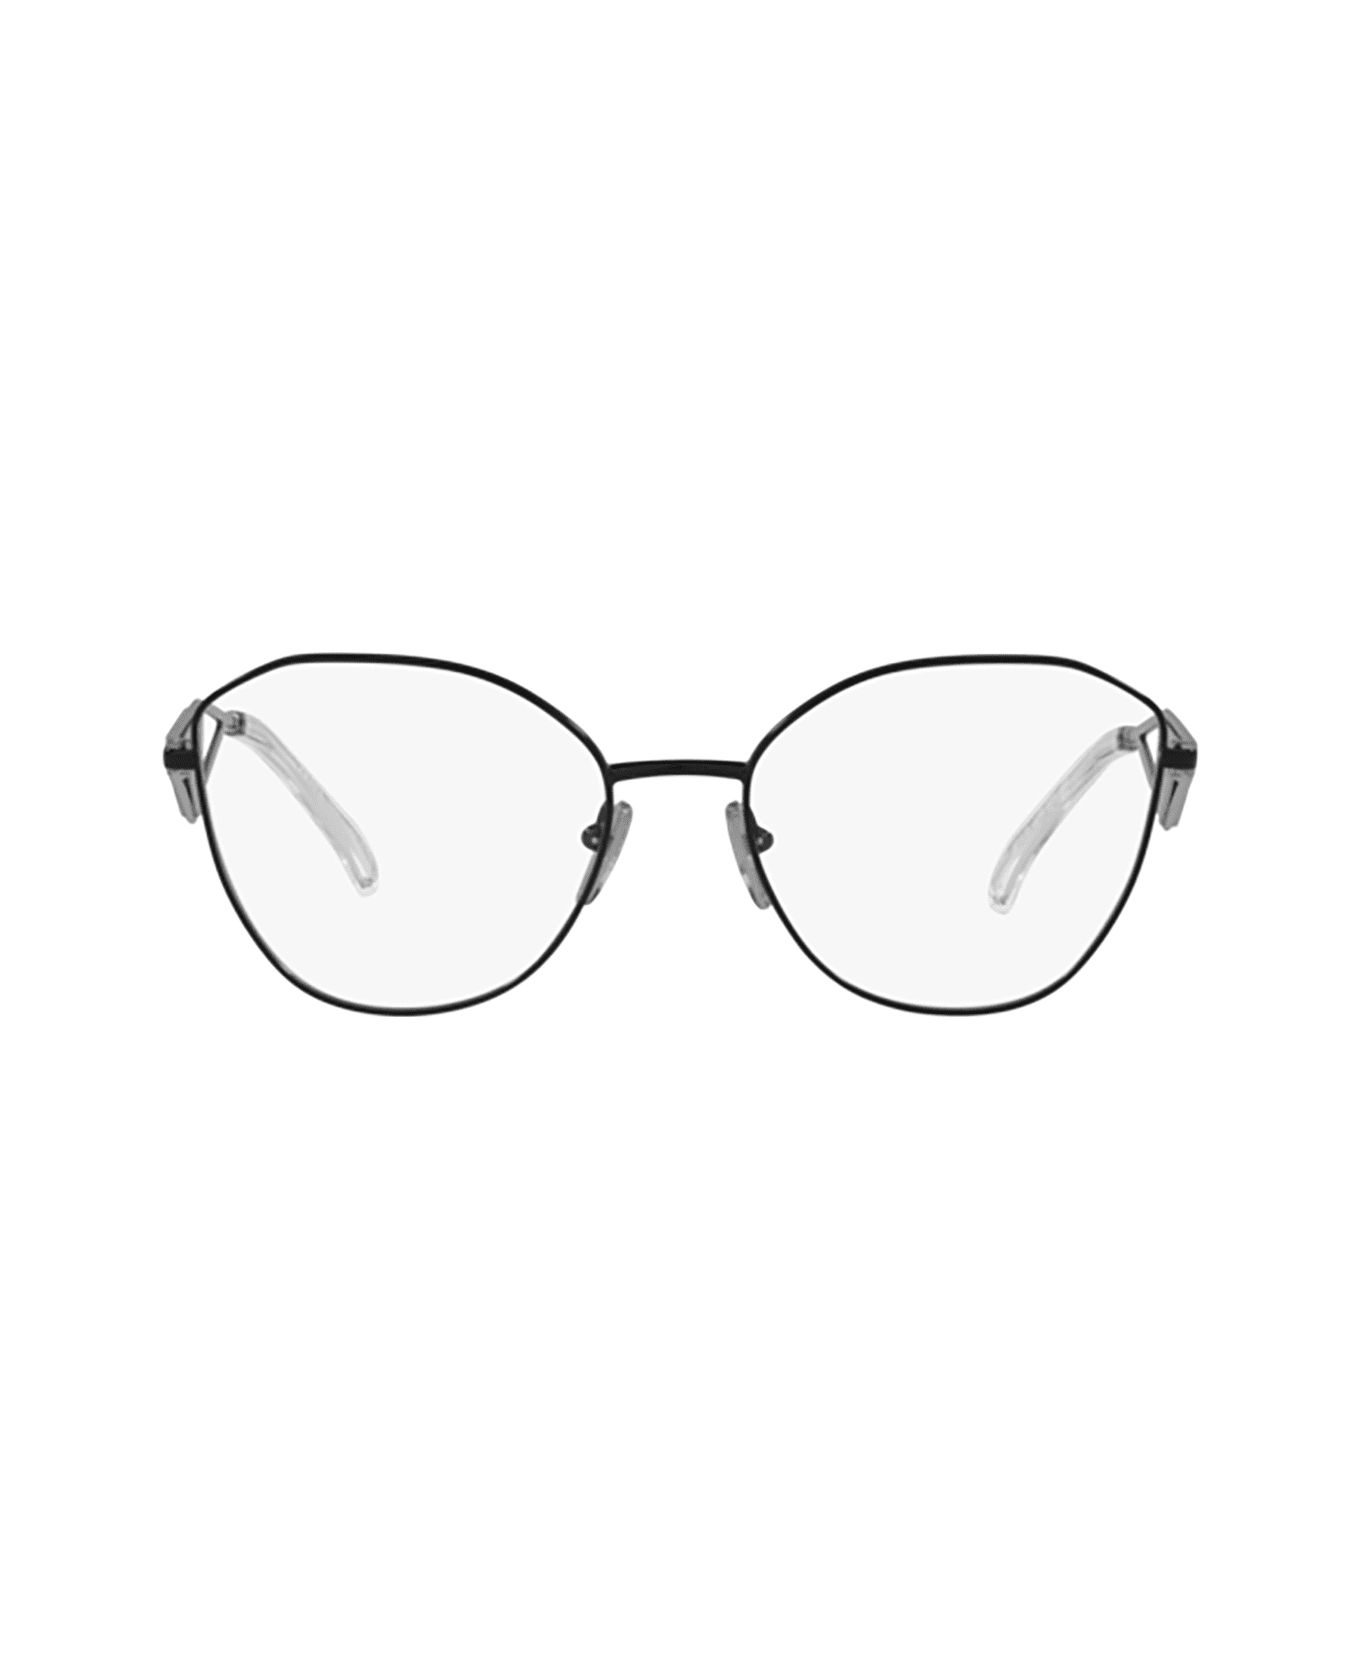 Prada Eyewear Pr 52zv Black Glasses - Black